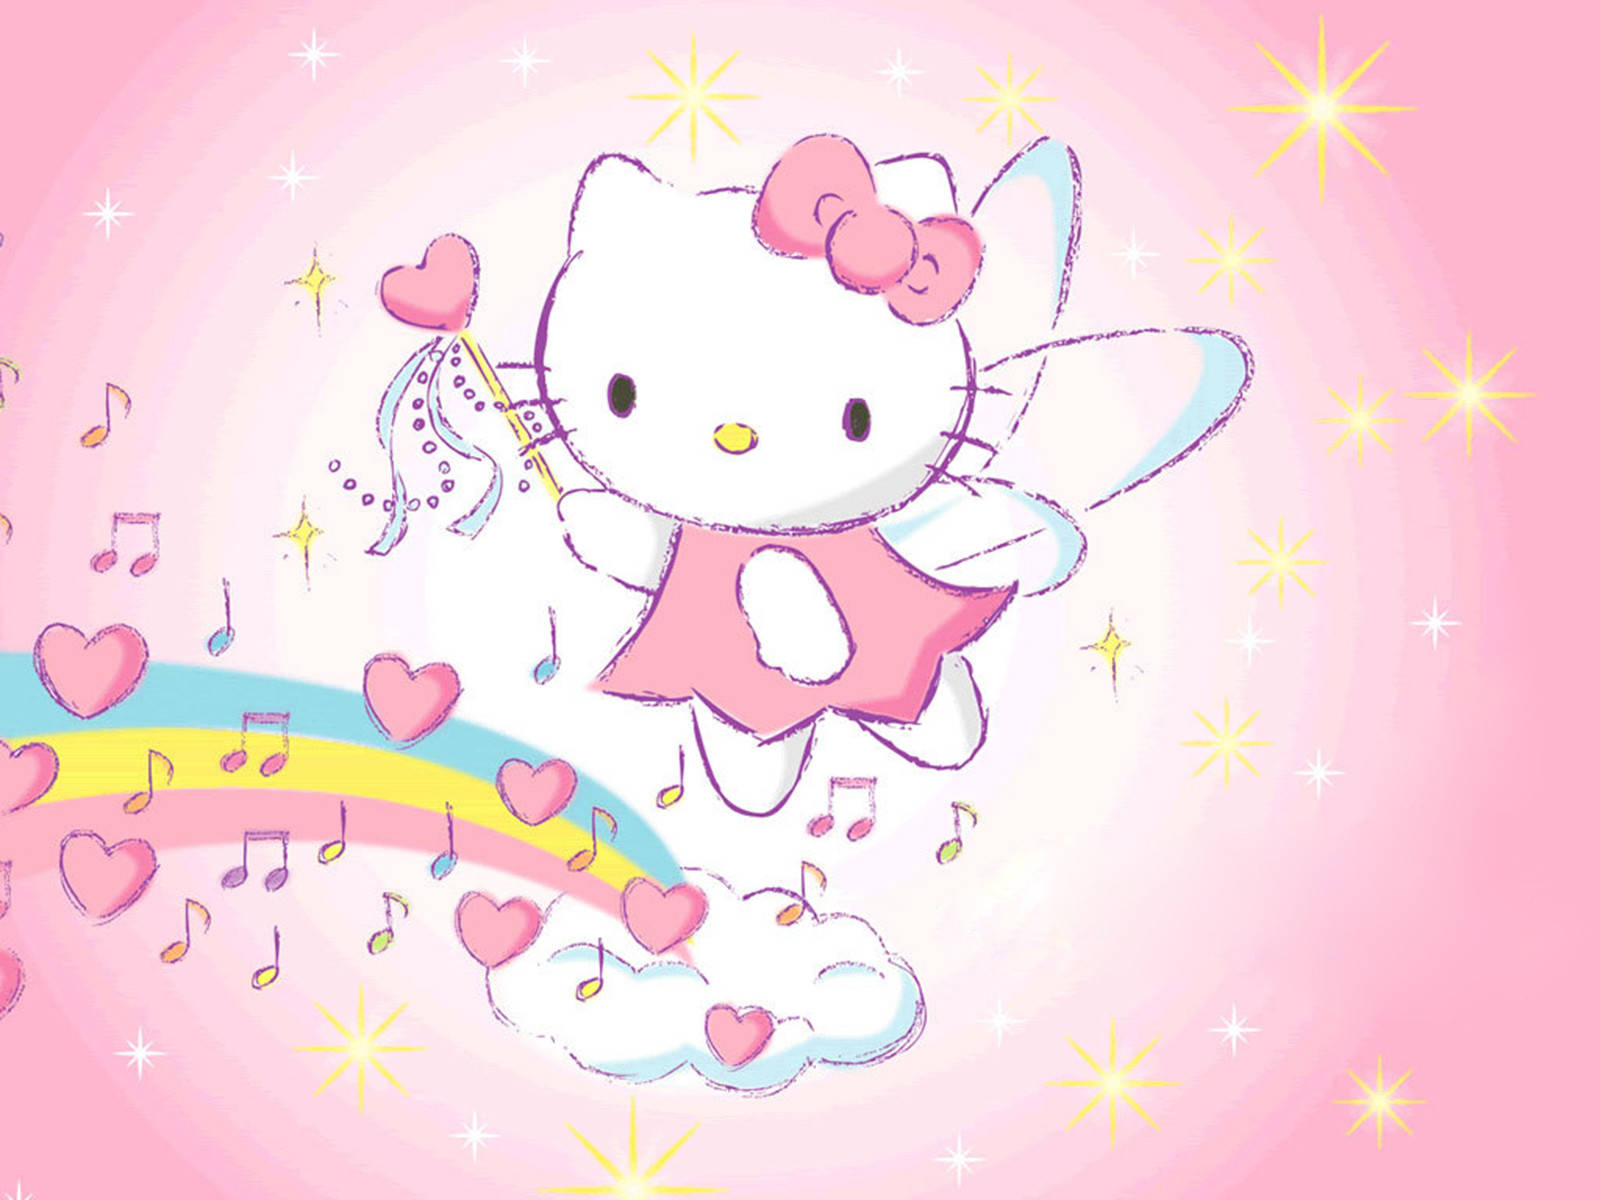 Sanriodesktop Hello Kitty Fata Musicale Sfondo